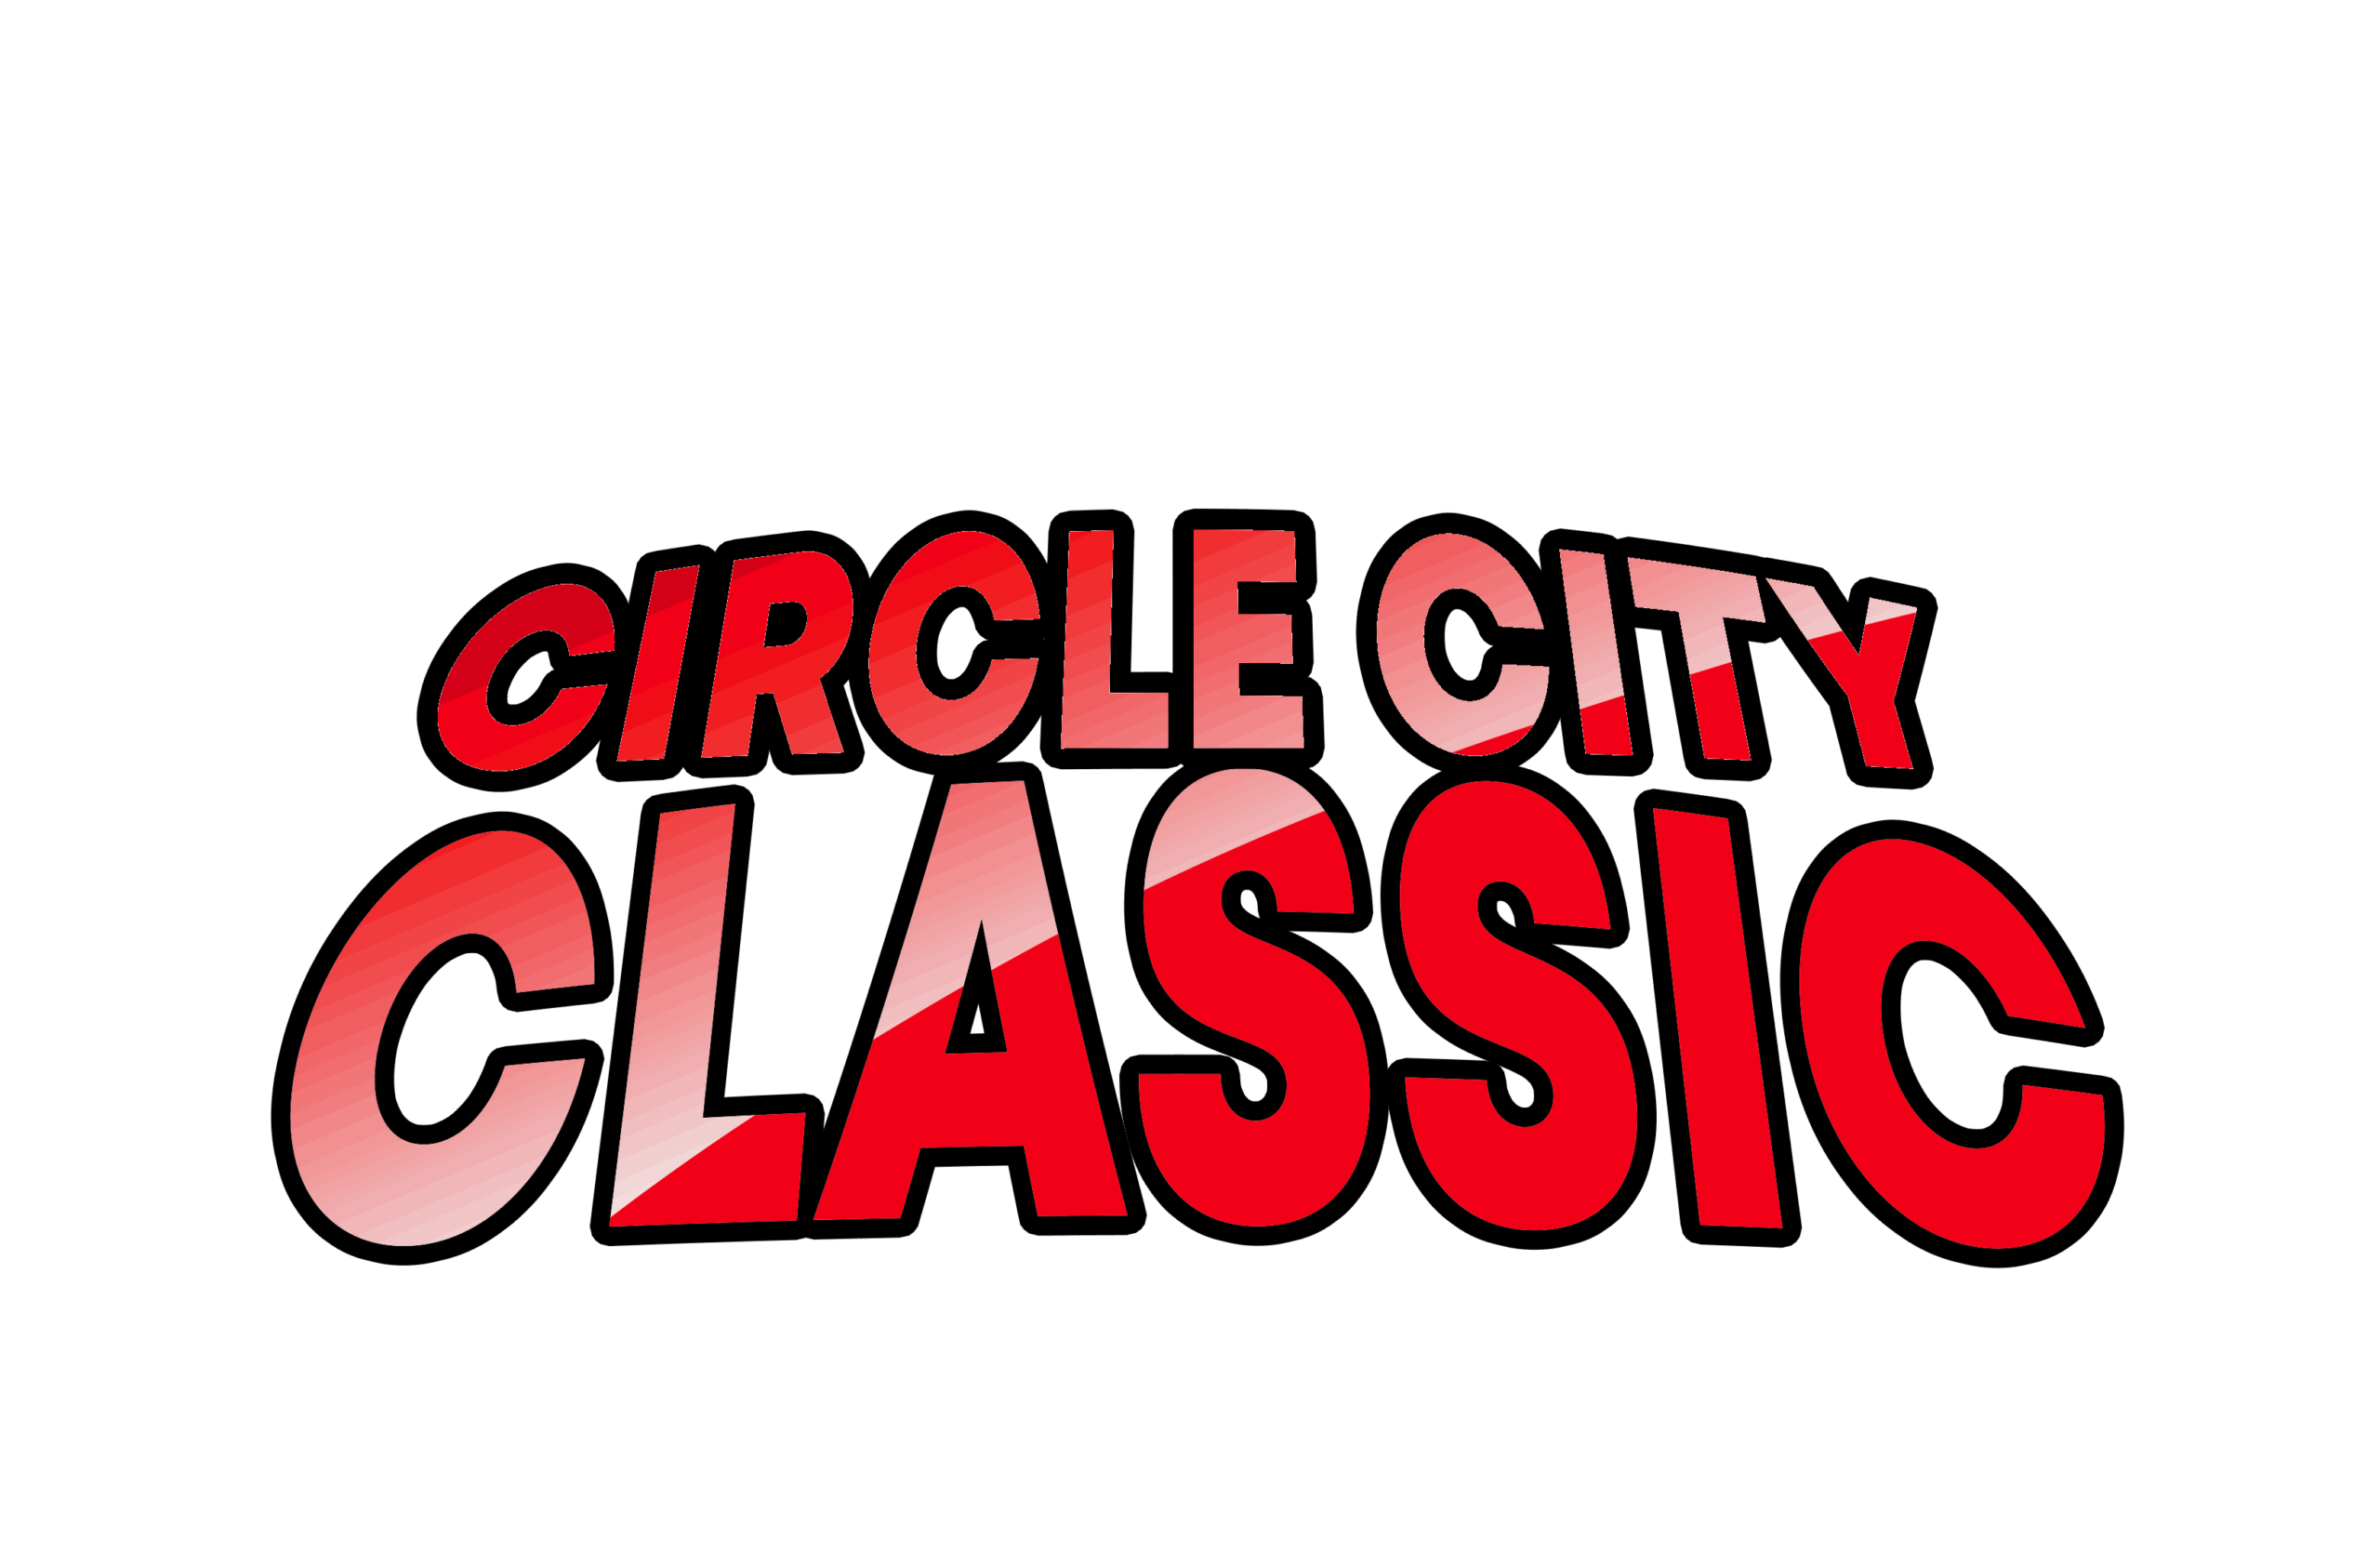 The Circle City Classic